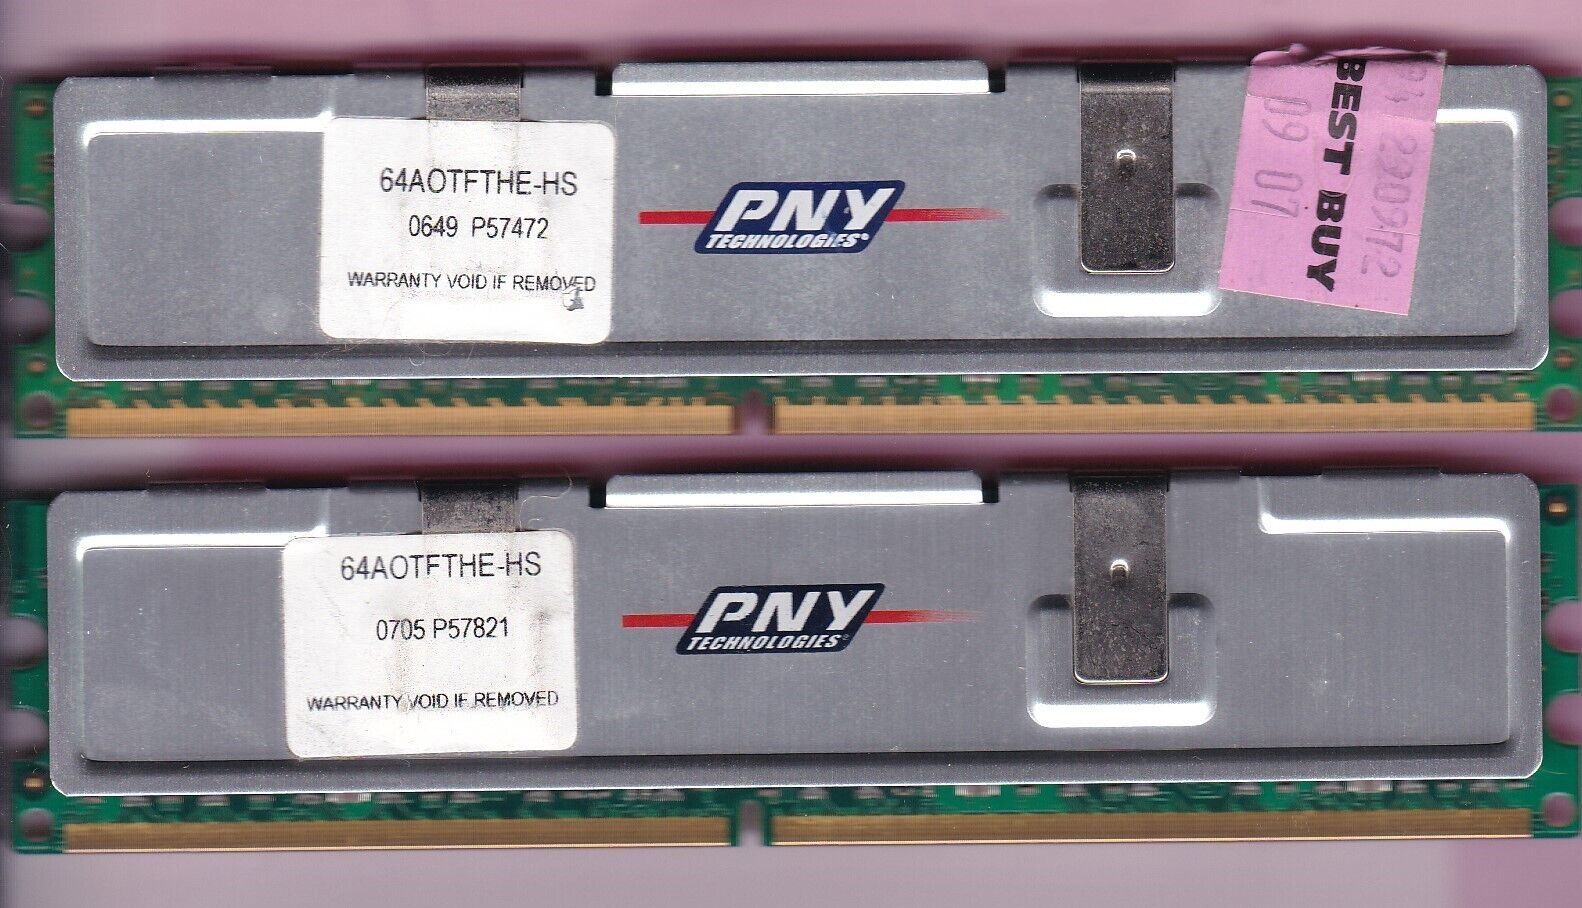 2GB 2x1GB PC2-5300 PNY 64A0TFTHE-HS DDR2-667 PERFORMANCE DESKTOP RAM MEMORY KIT